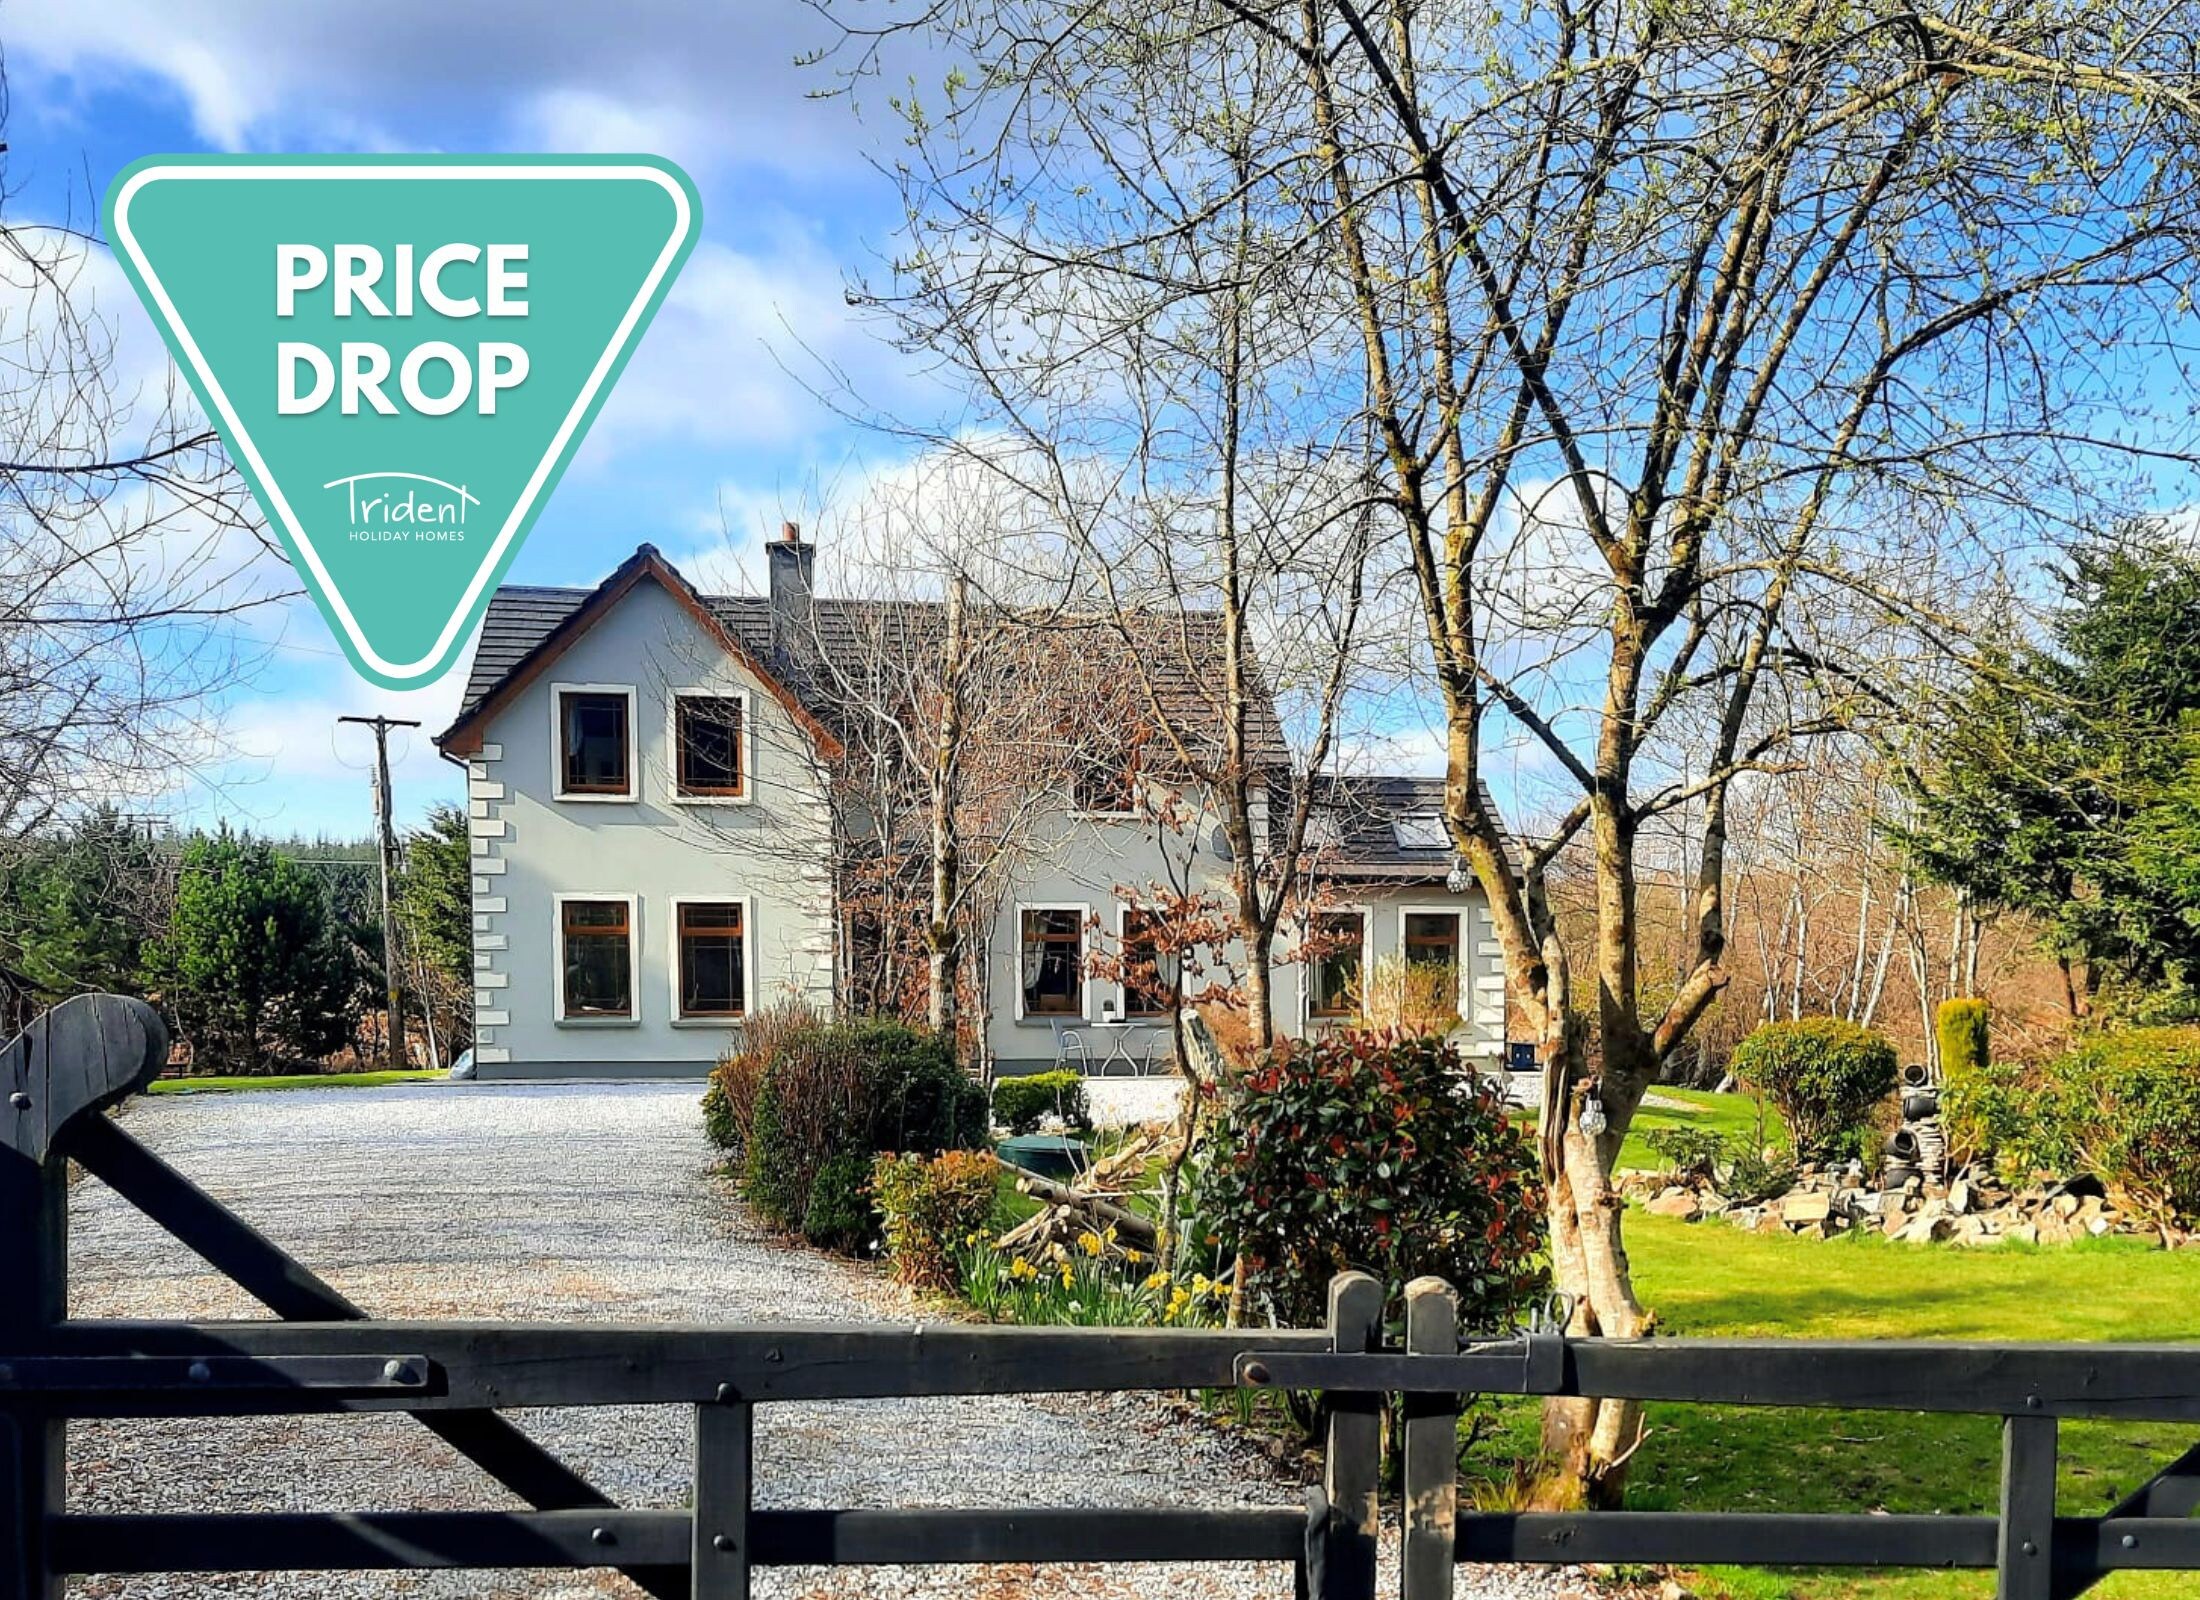 
Knockmanagh Holiday Home, Luxury Holiday Accommodation Available near Killarney, County Kerry.